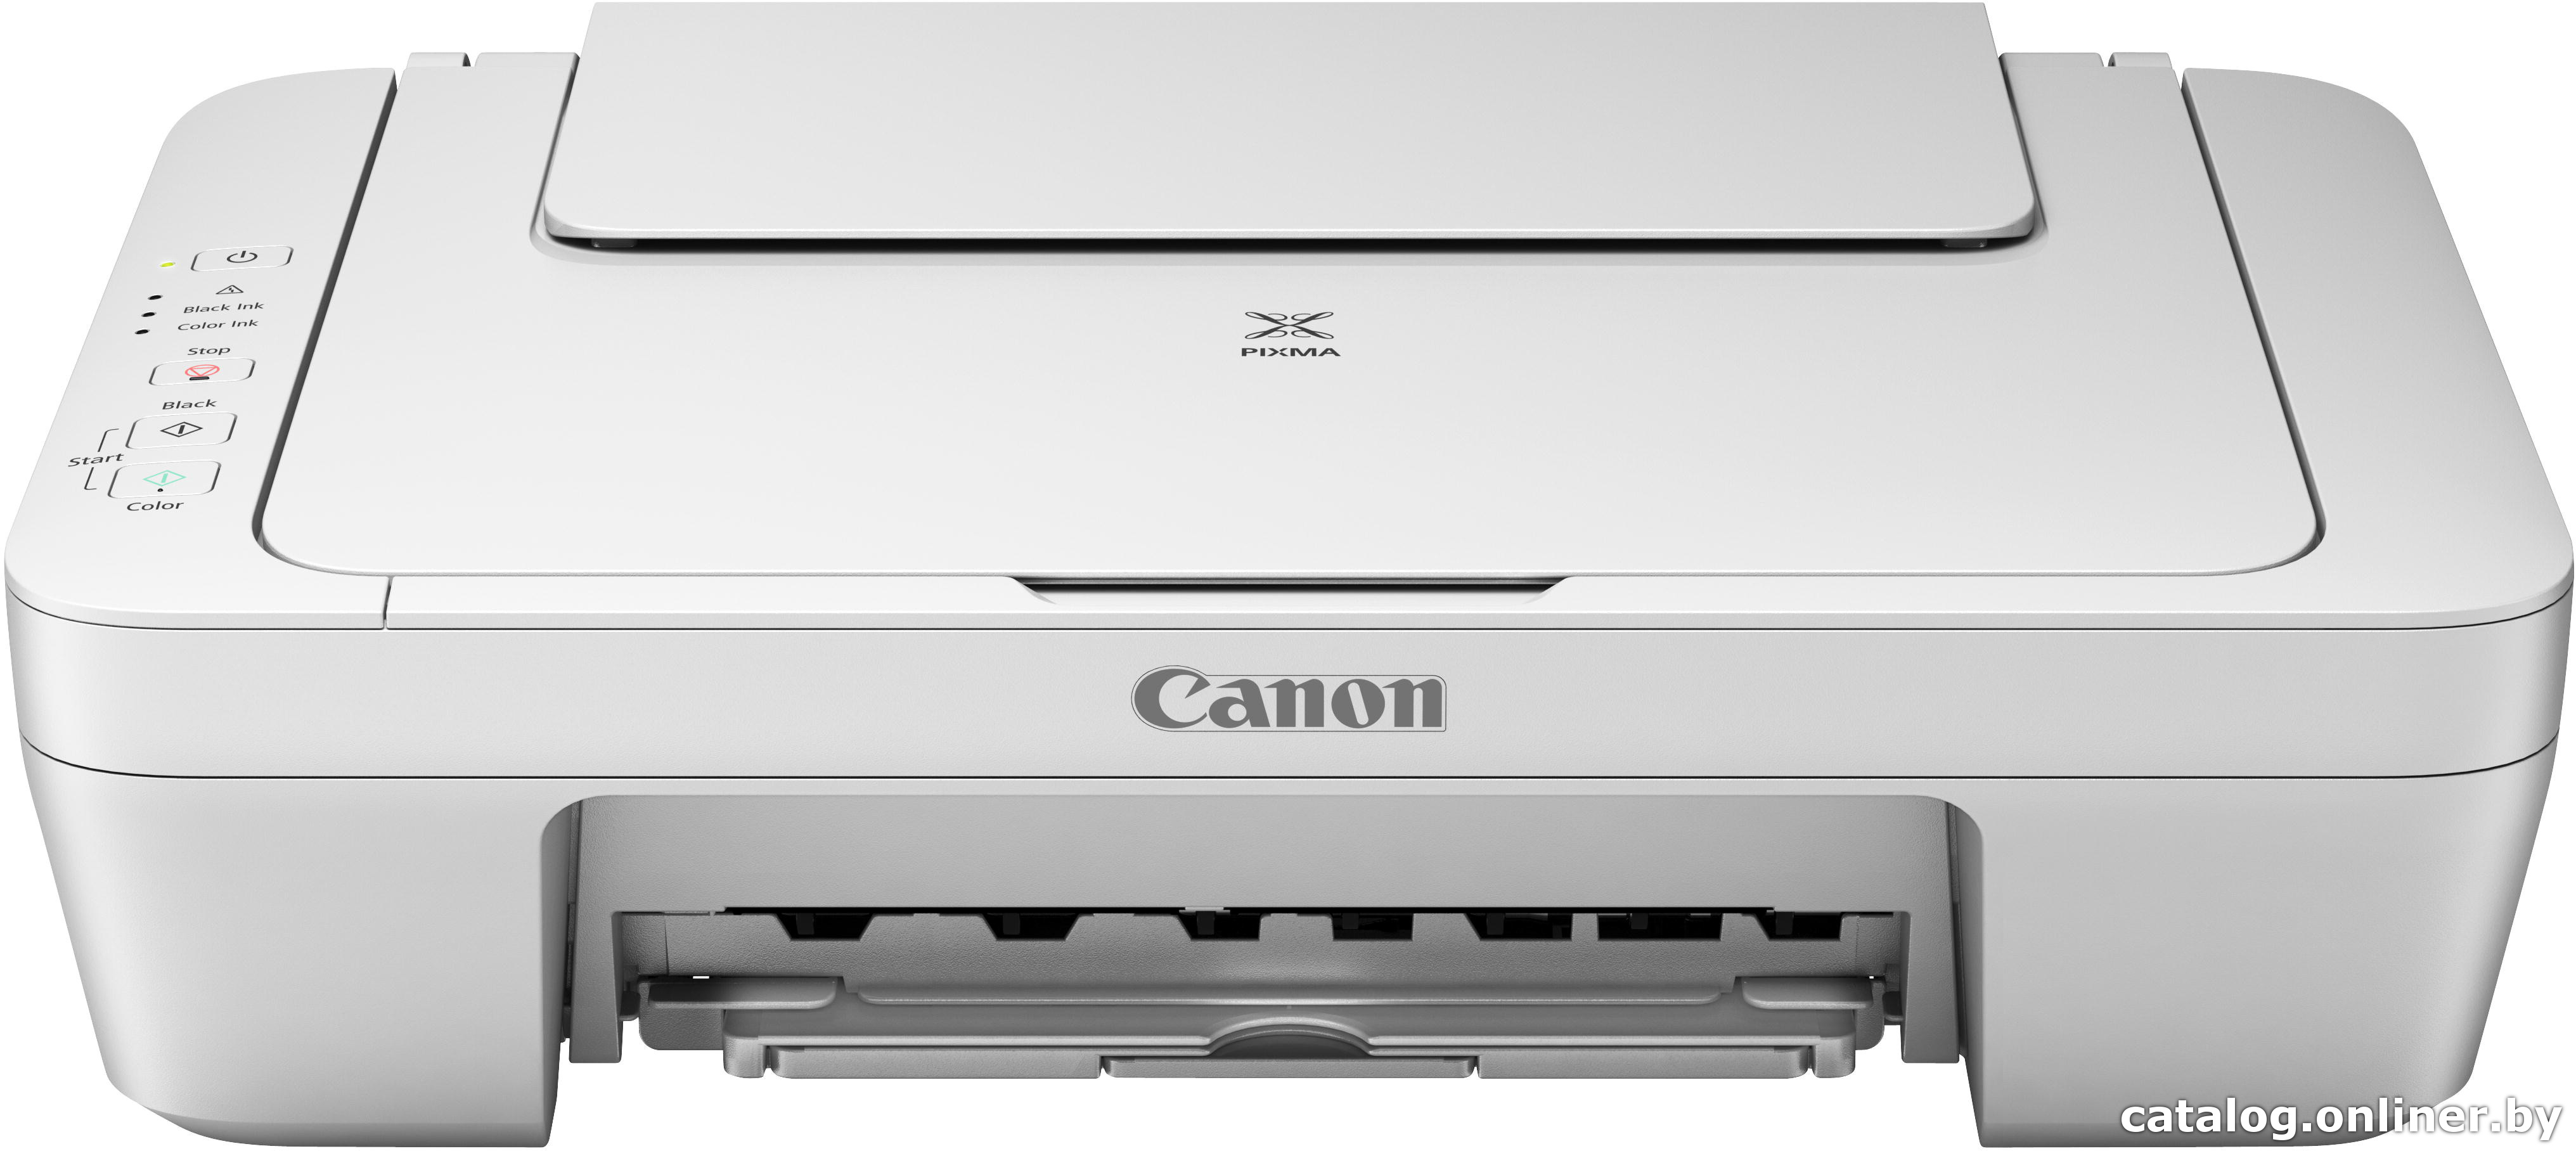 Canon Printer Ip7200 Drivers For Mac Os High Sierra Templatesdpok